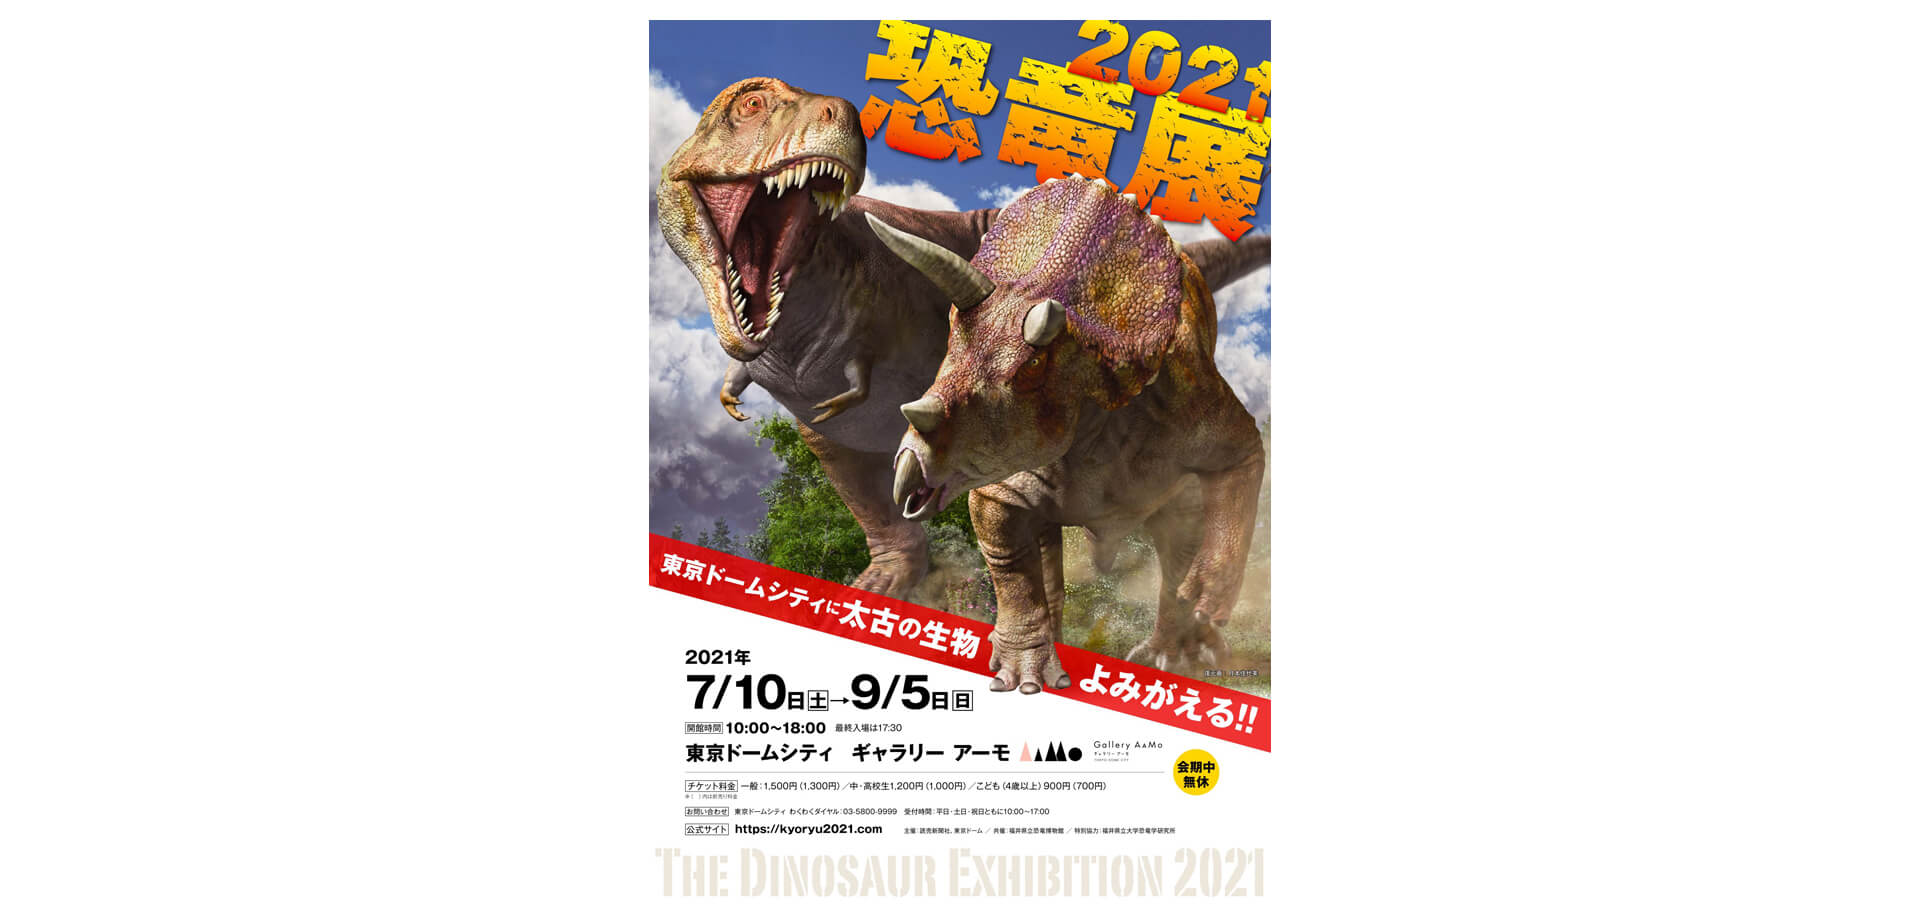 Gallery AaMo『恐竜展2021』 | 関東のお出かけ情報ならオソトイコ